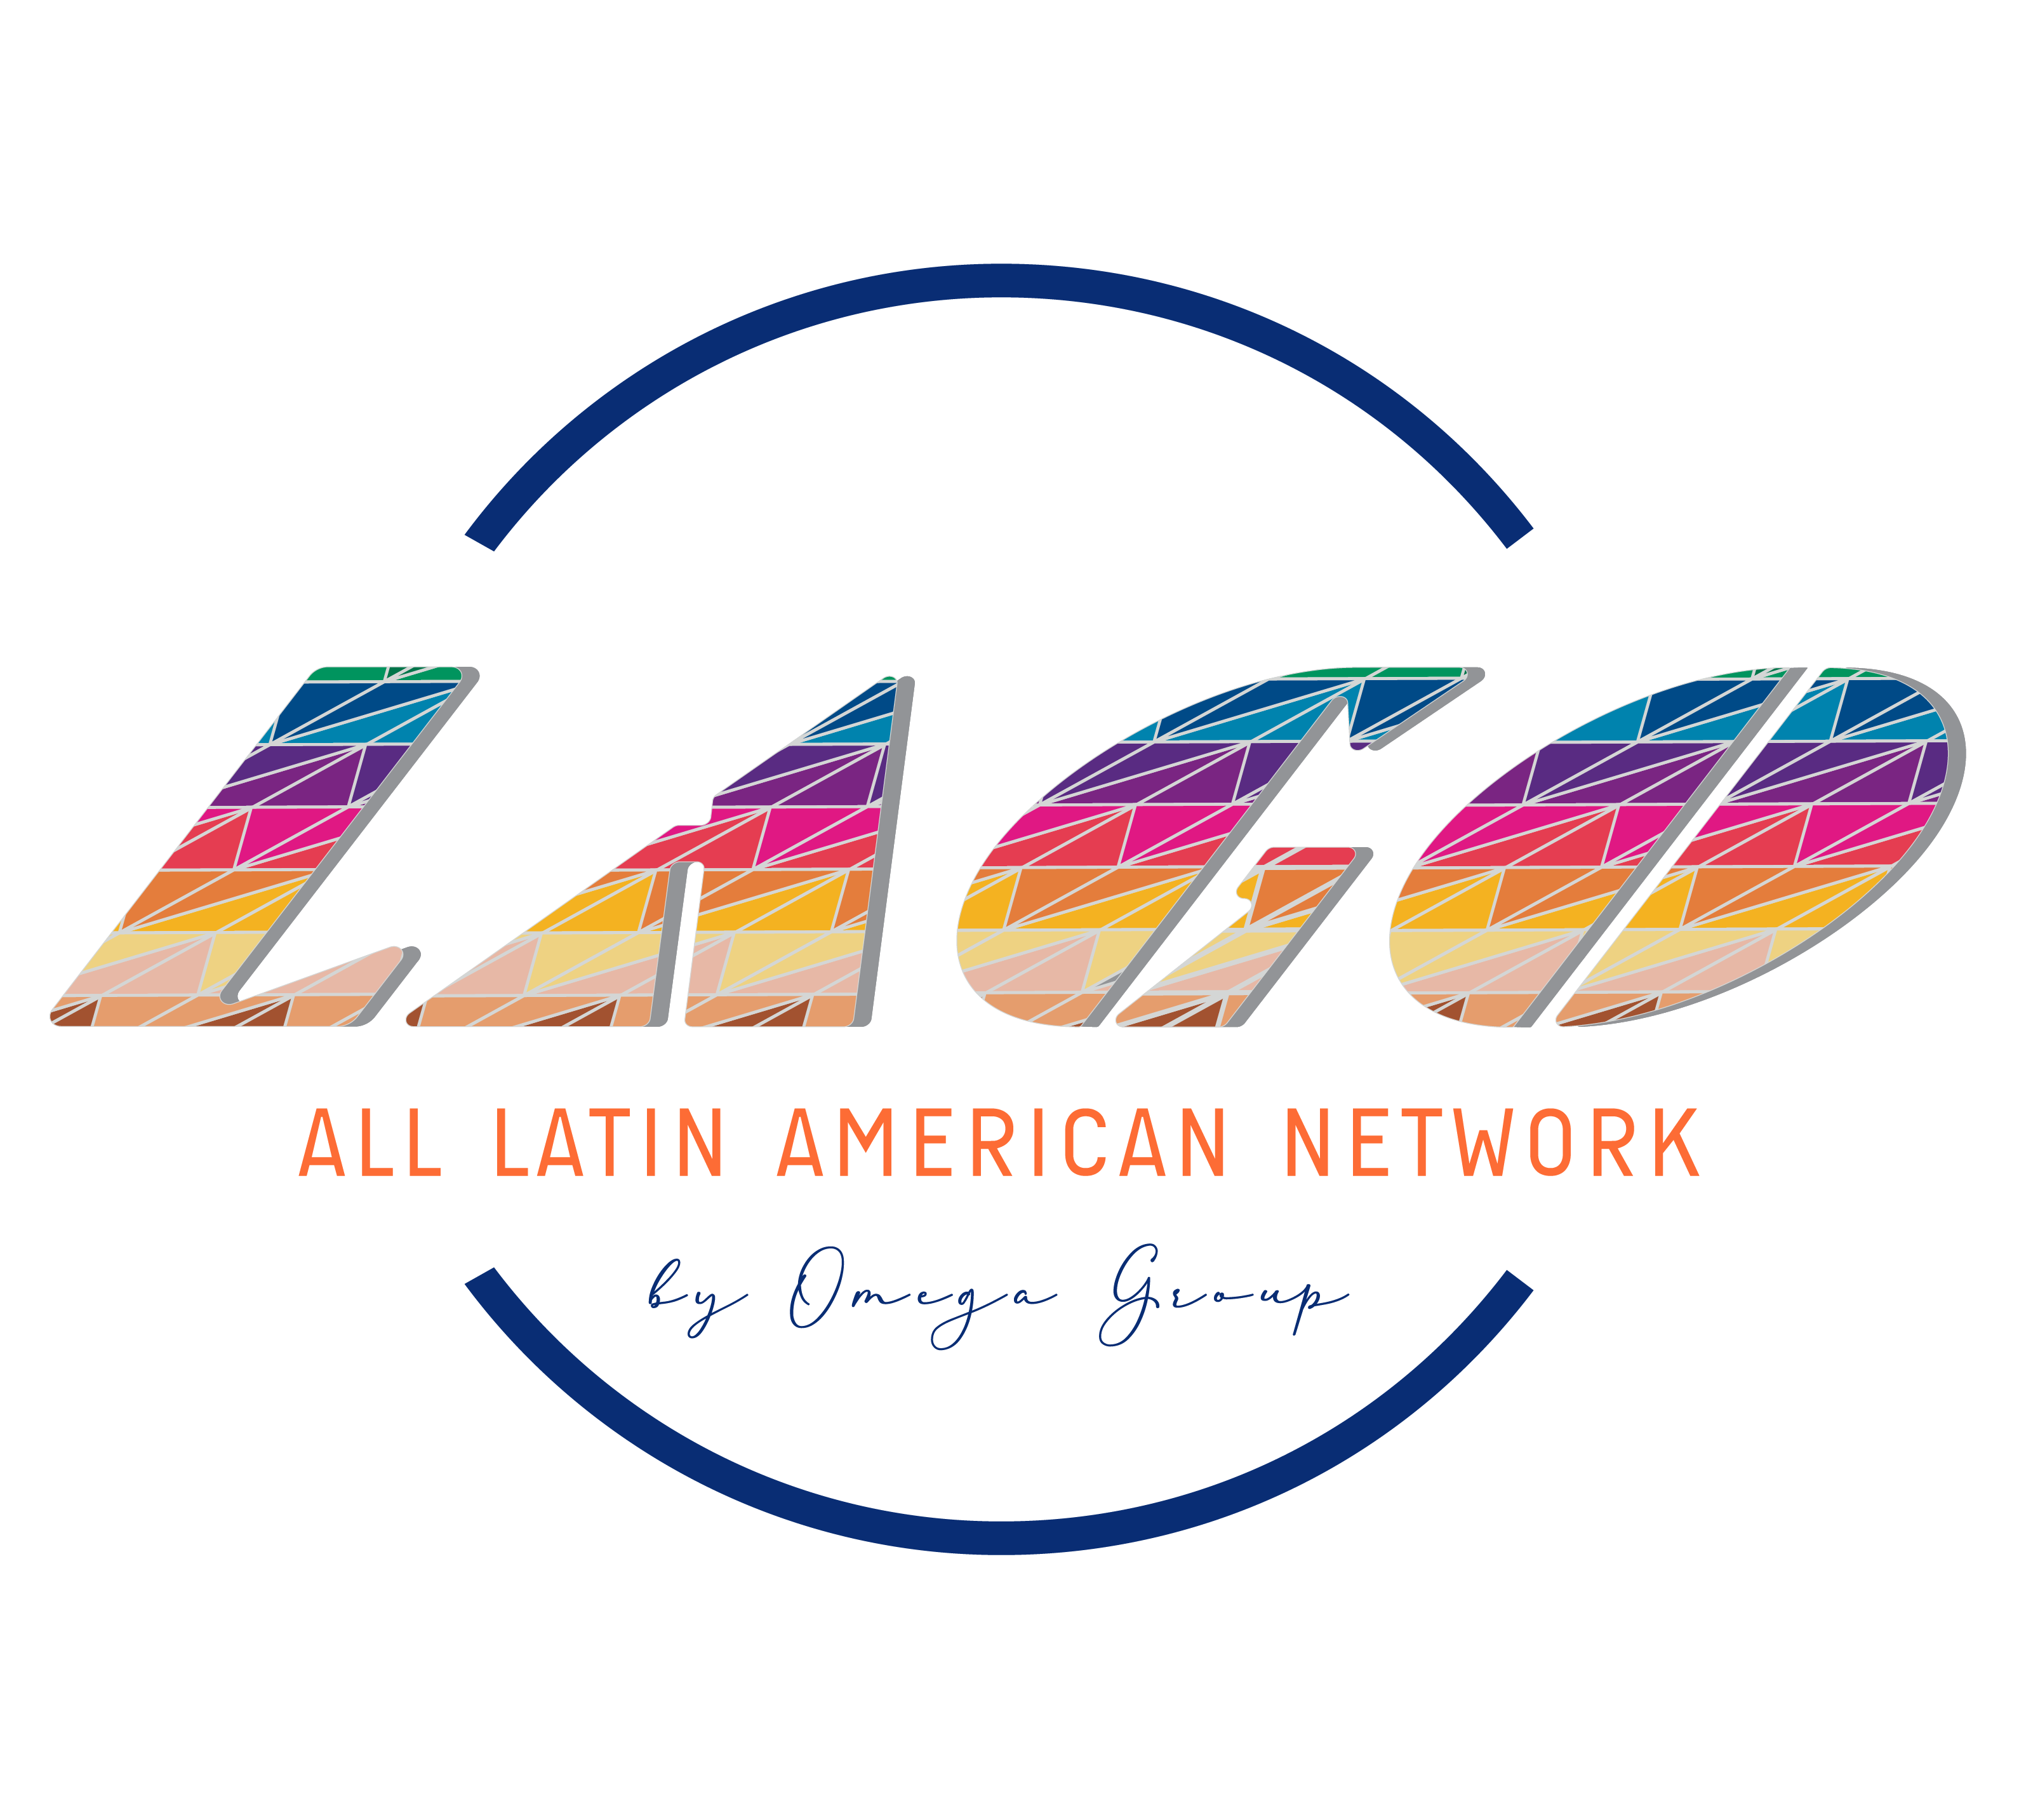 LAGO Network by Grupo Omega